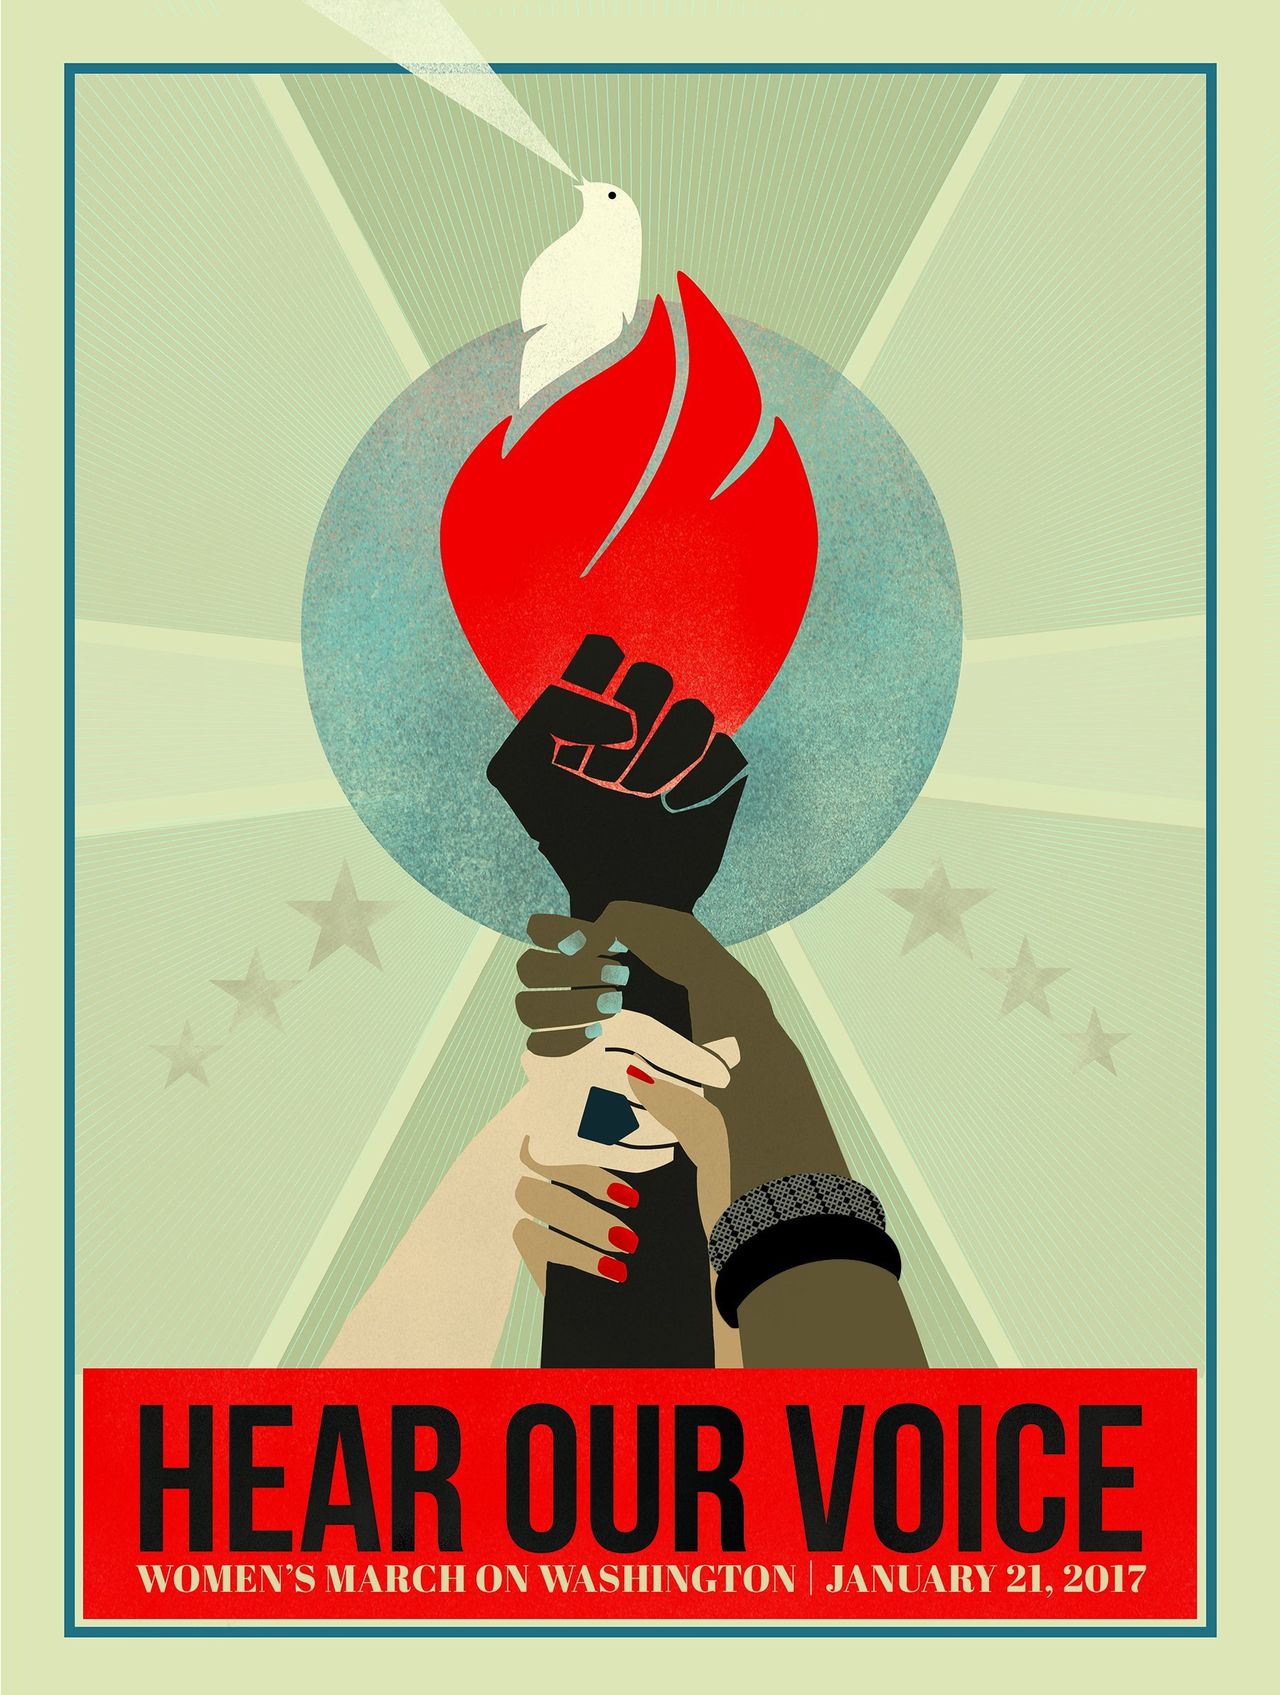 "Hear Our Voice" by Liza Donovan